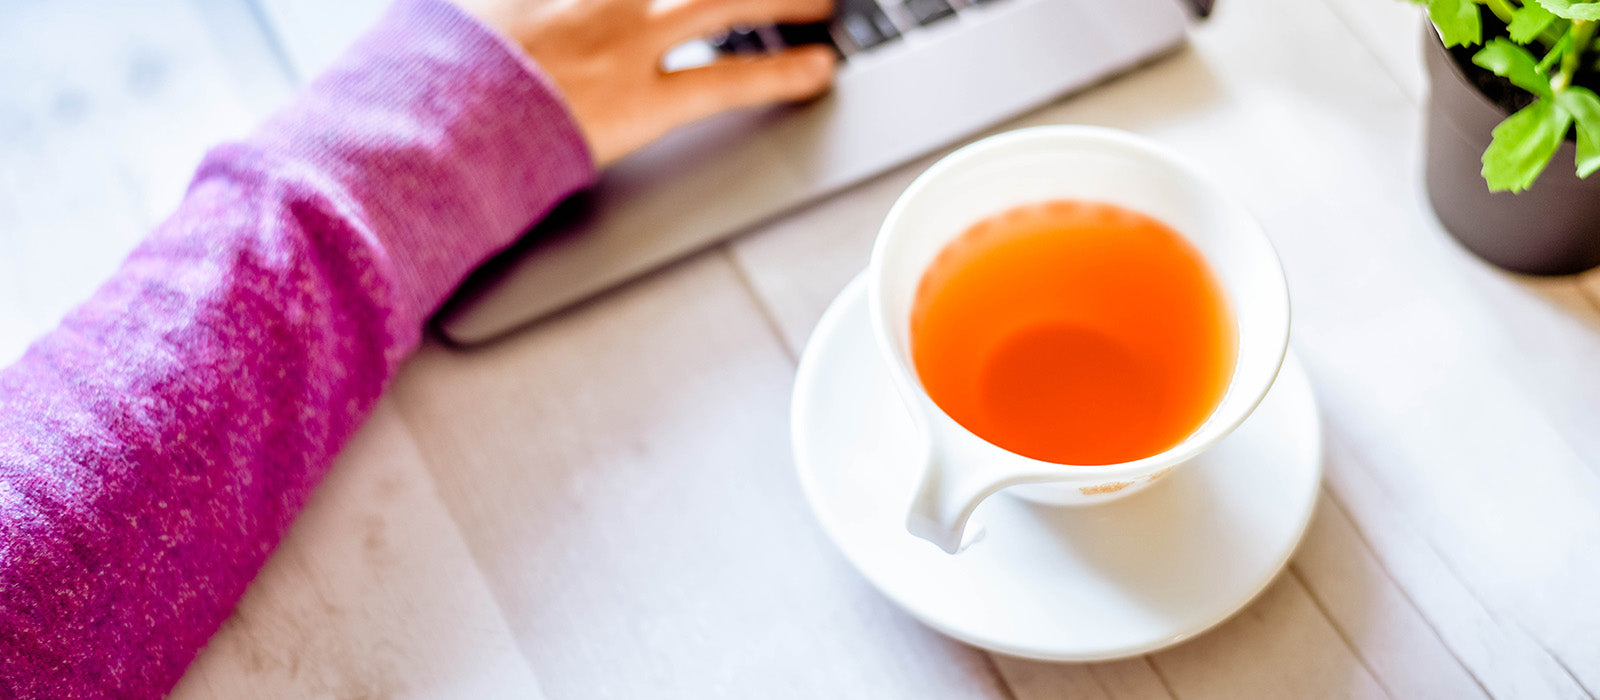 Work-Relax-Drink-More-Loose-Leaf-Tea